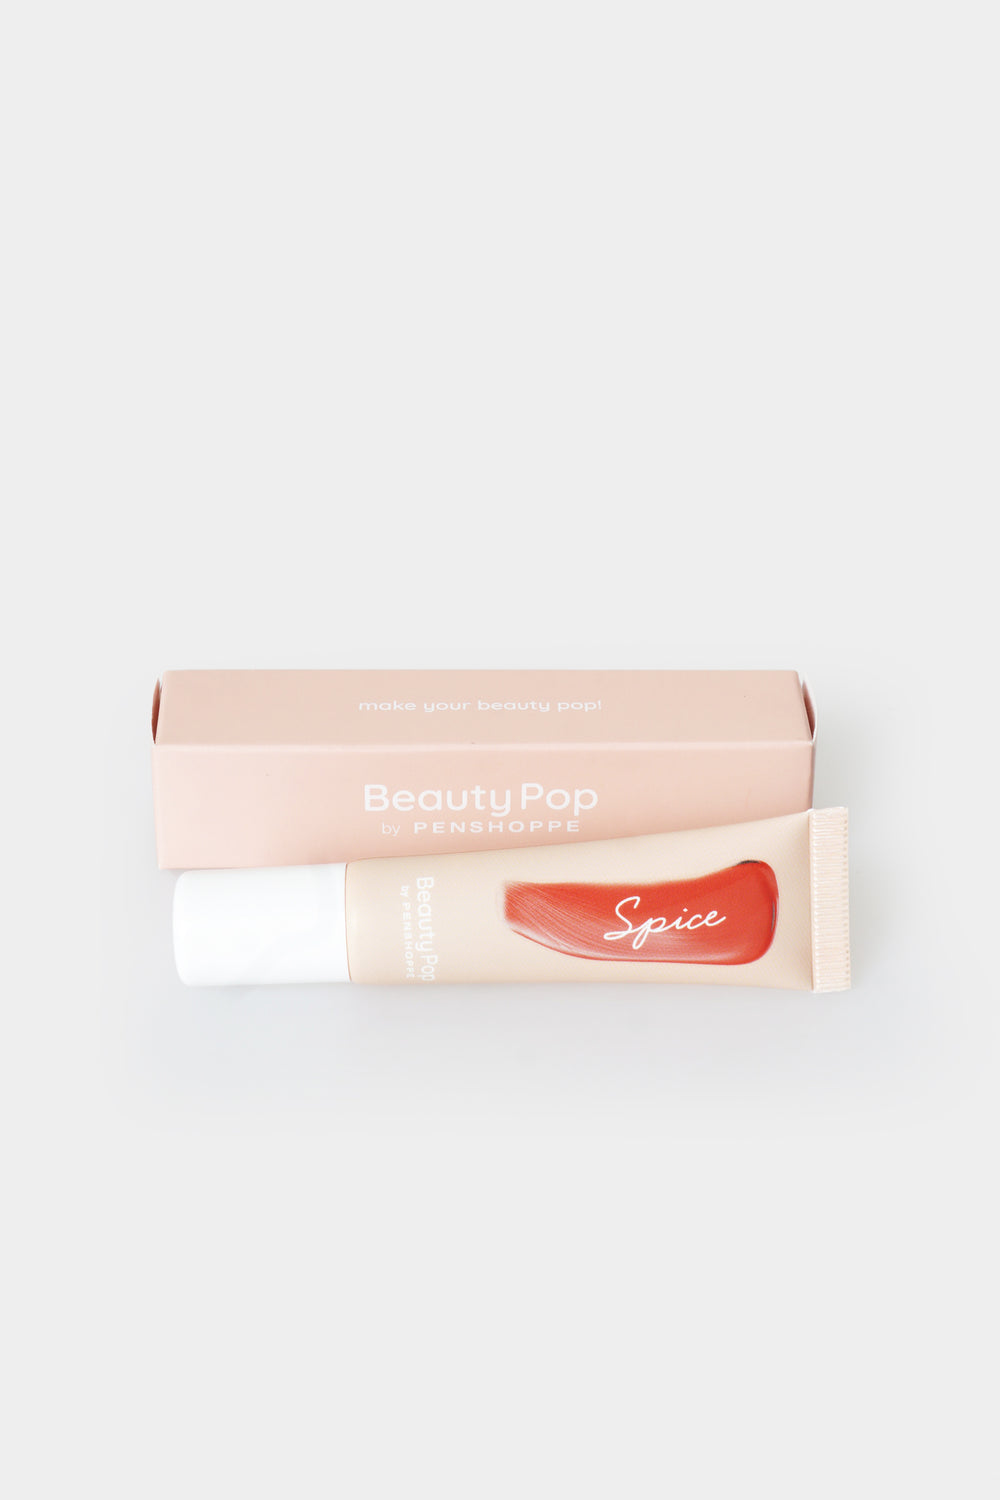 Penshoppe Beauty Pop Cream Blush In Spice